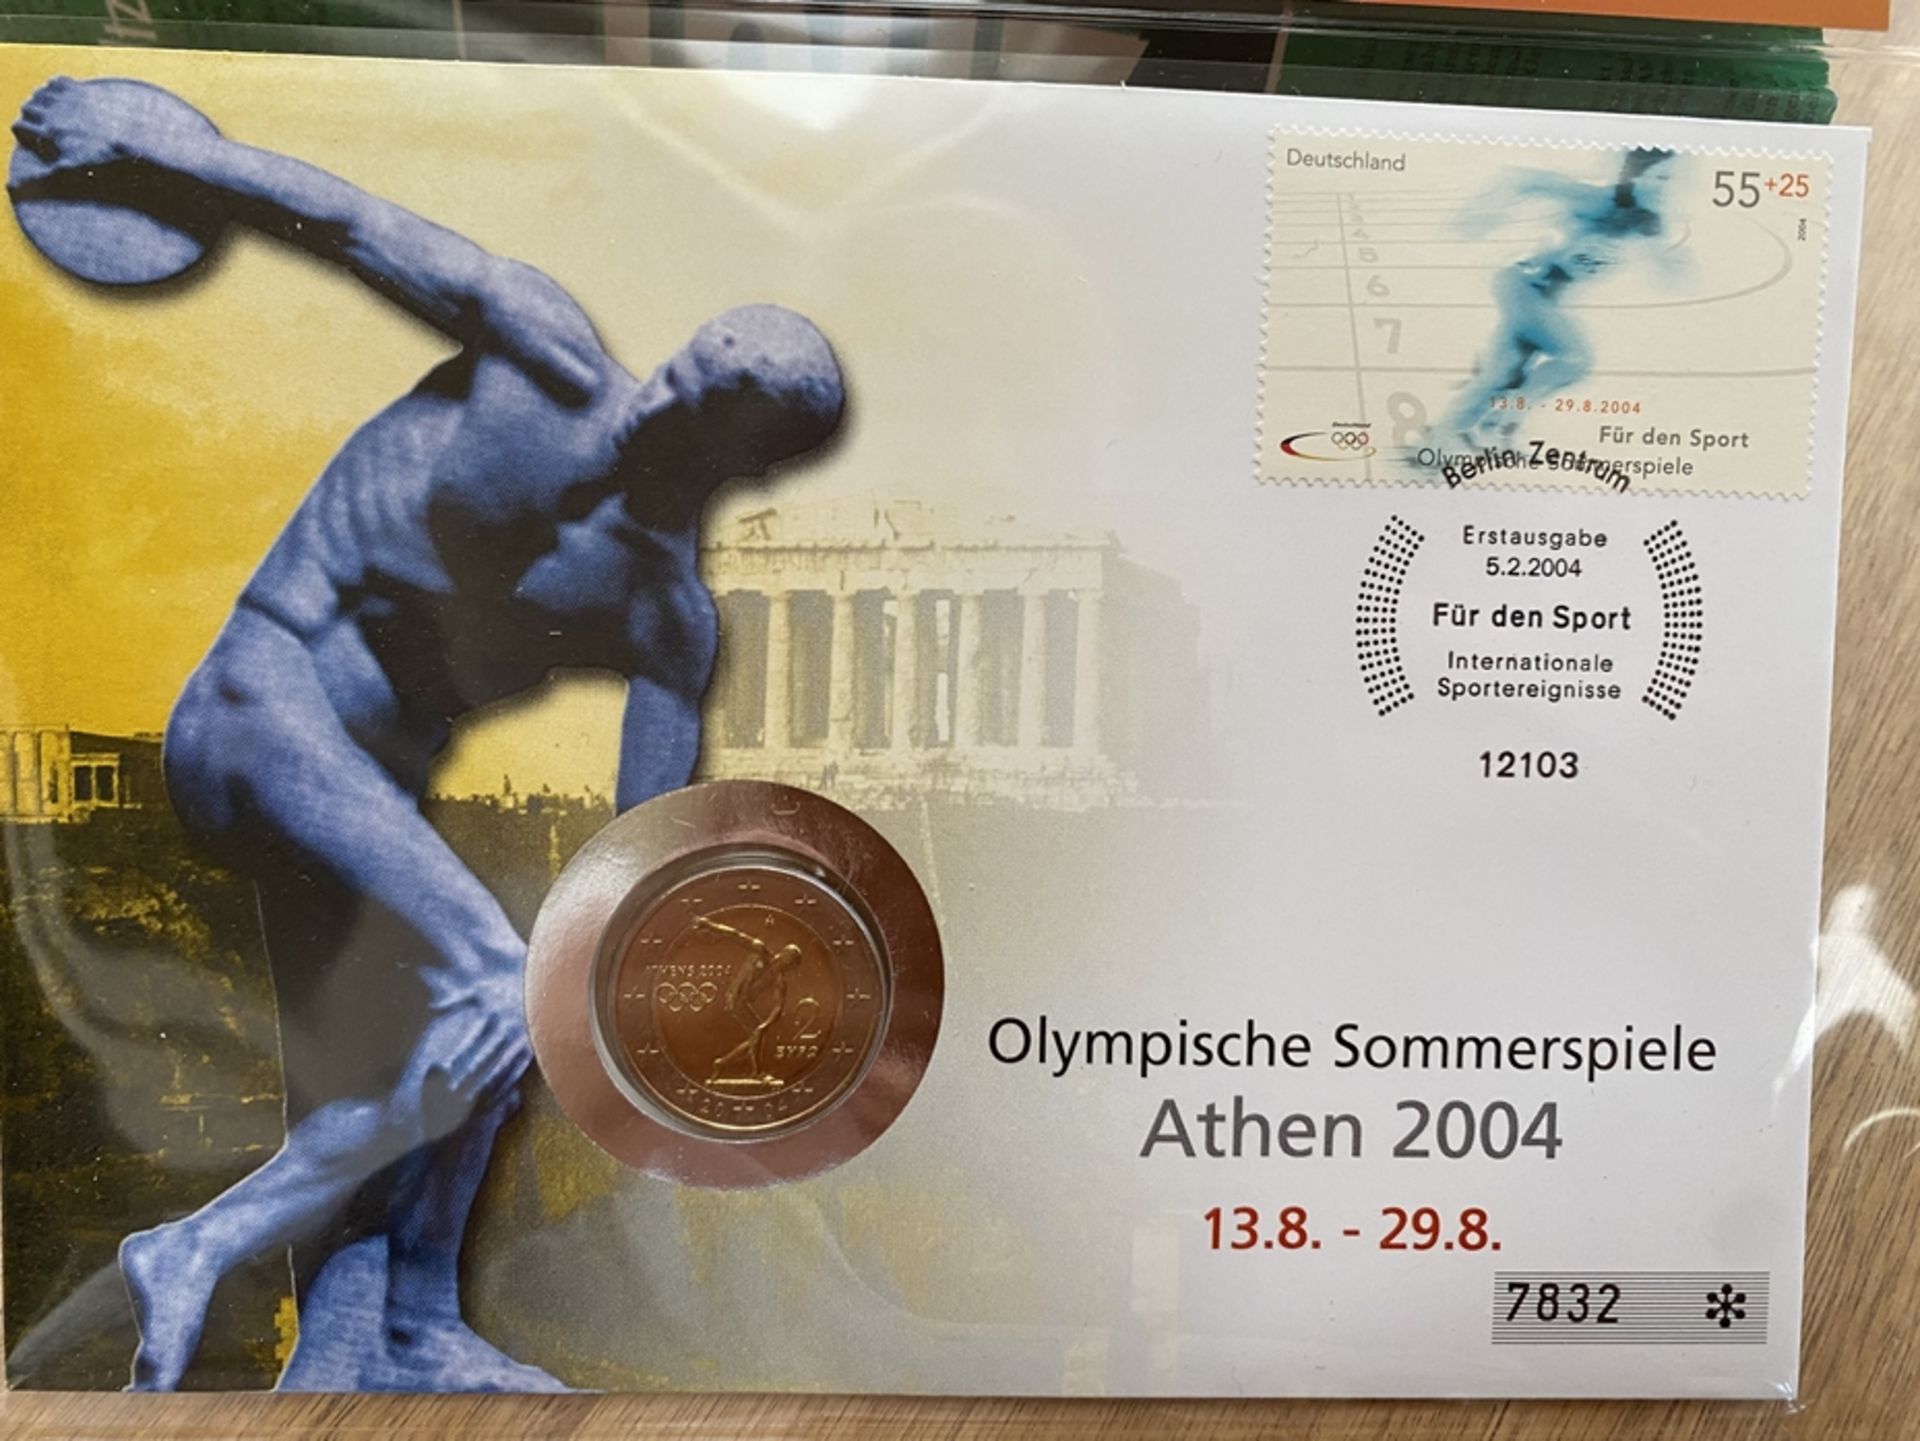 Olympische Sommerspiele Athen 2004, 2 Euro Griechenland - Image 2 of 3